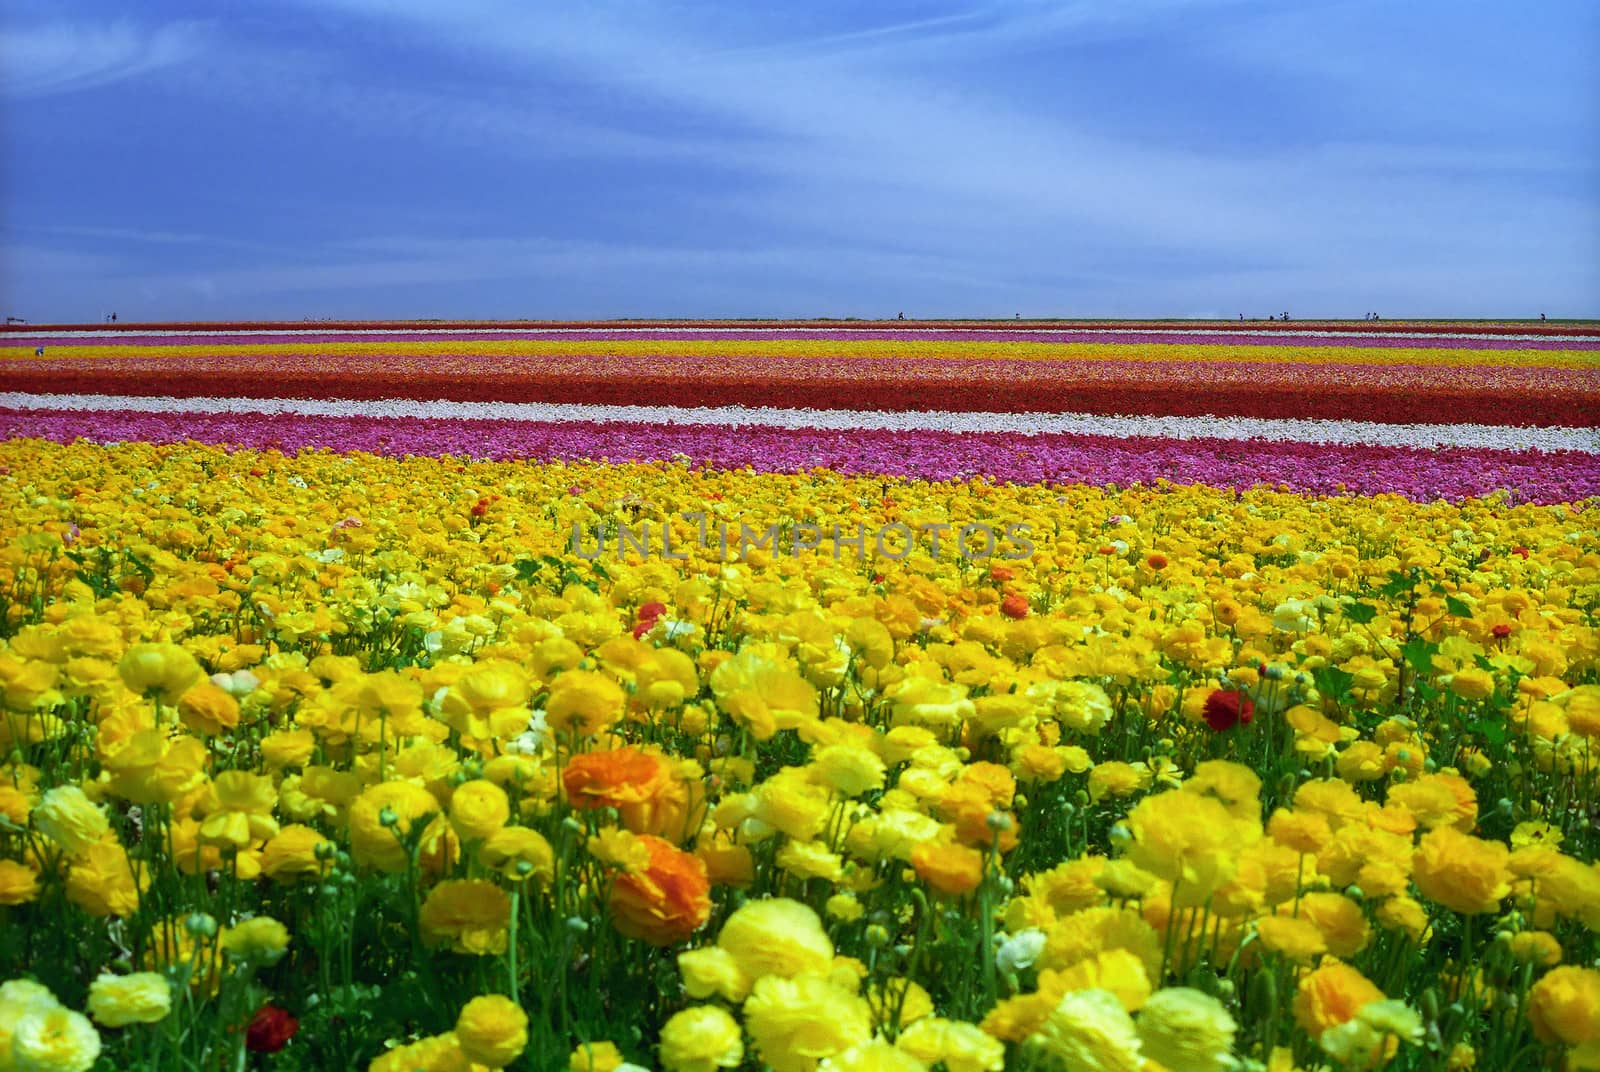 Colorful Flower Field by PJ1960